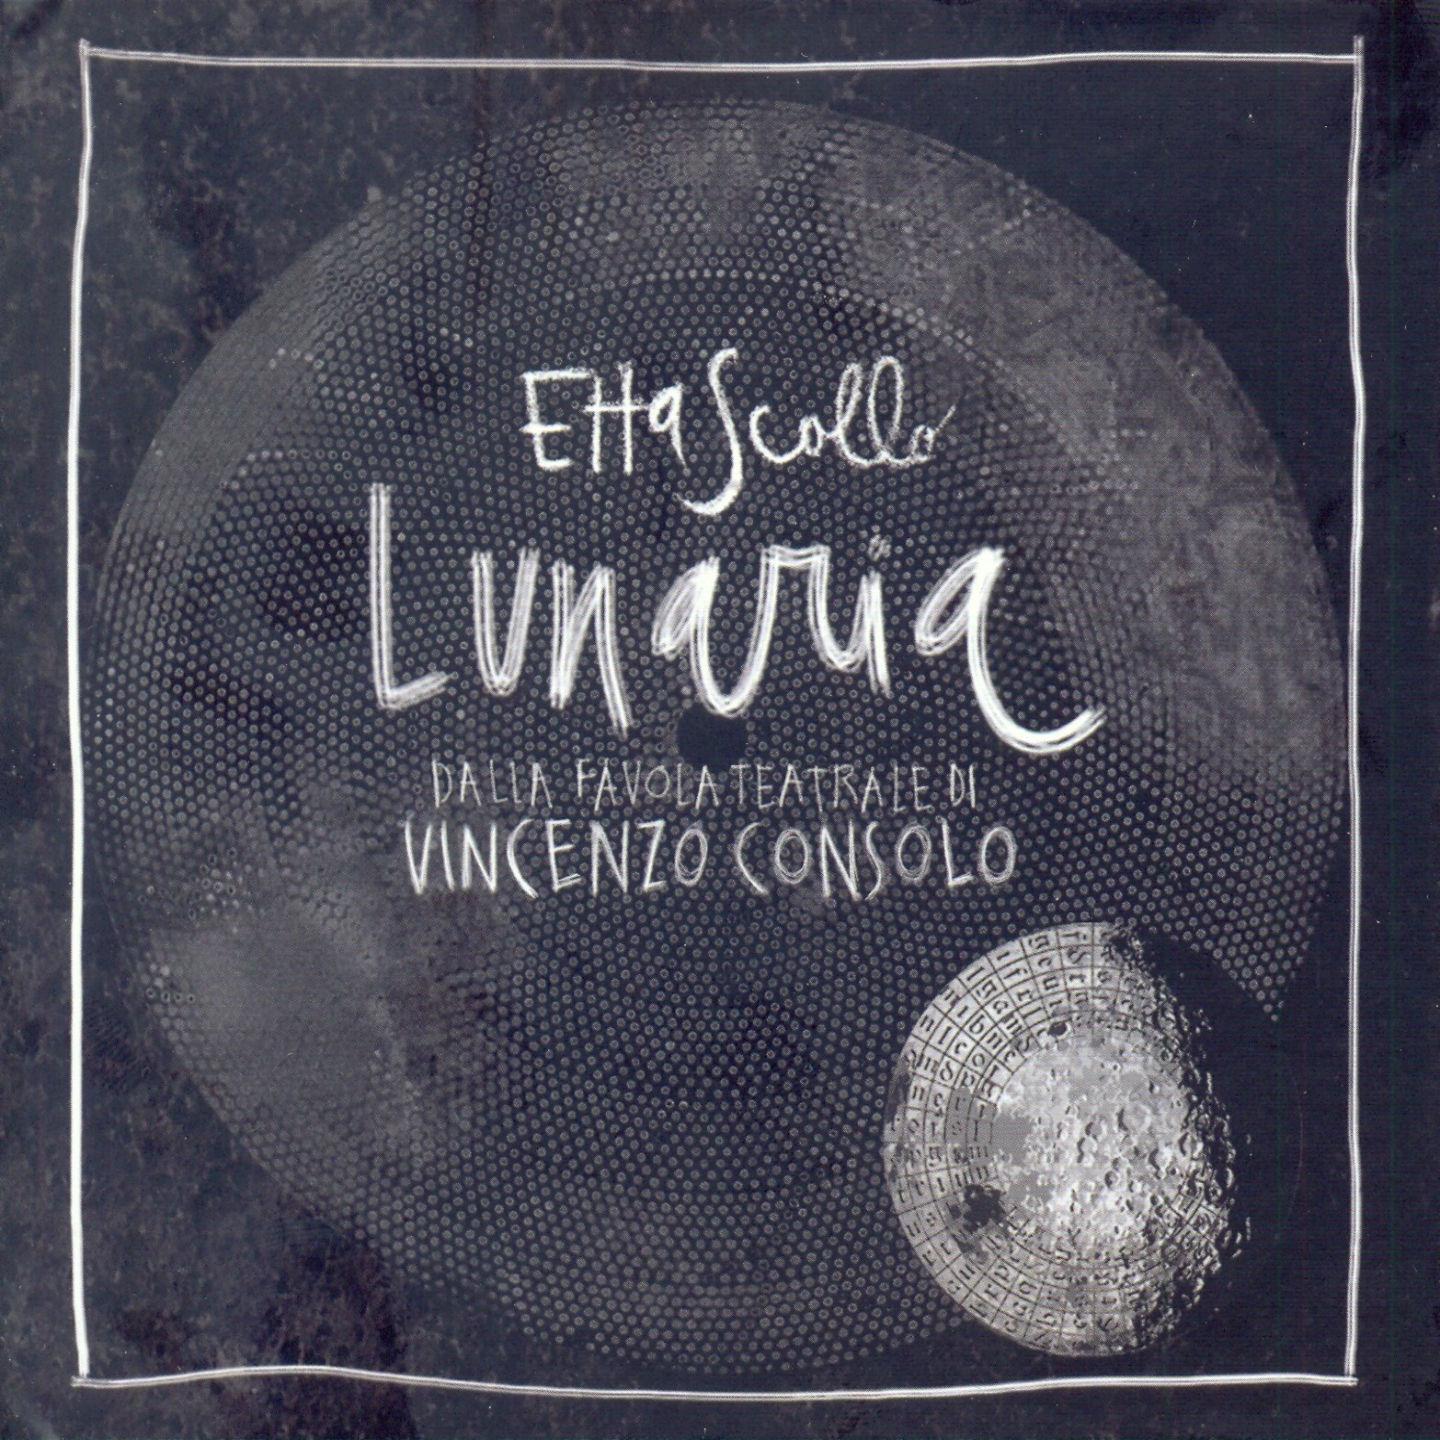 Постер альбома Lunaria